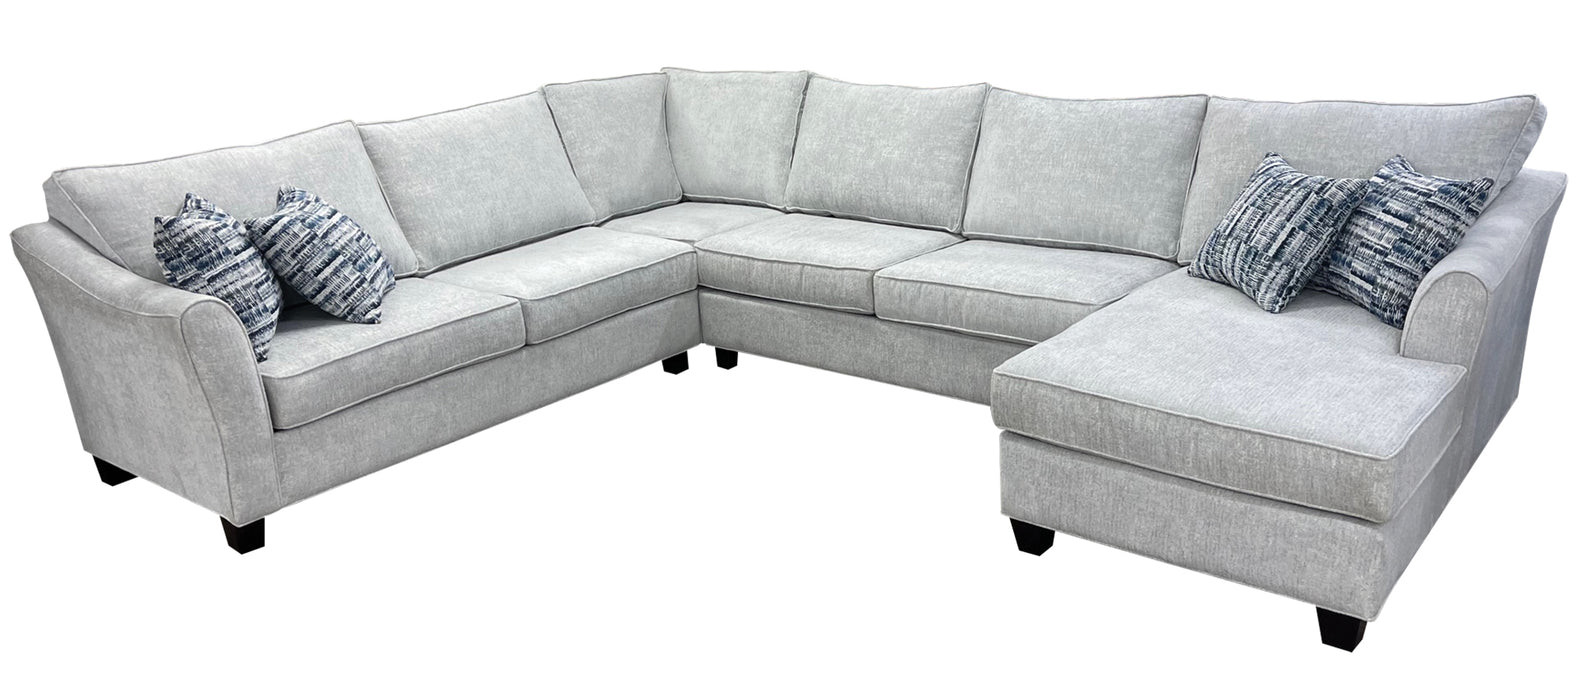 Mariano Italian Leather Furniture - Rowan 4 Piece Sectional in Cirrus Blue - 5700-30L-10C-30A-24R